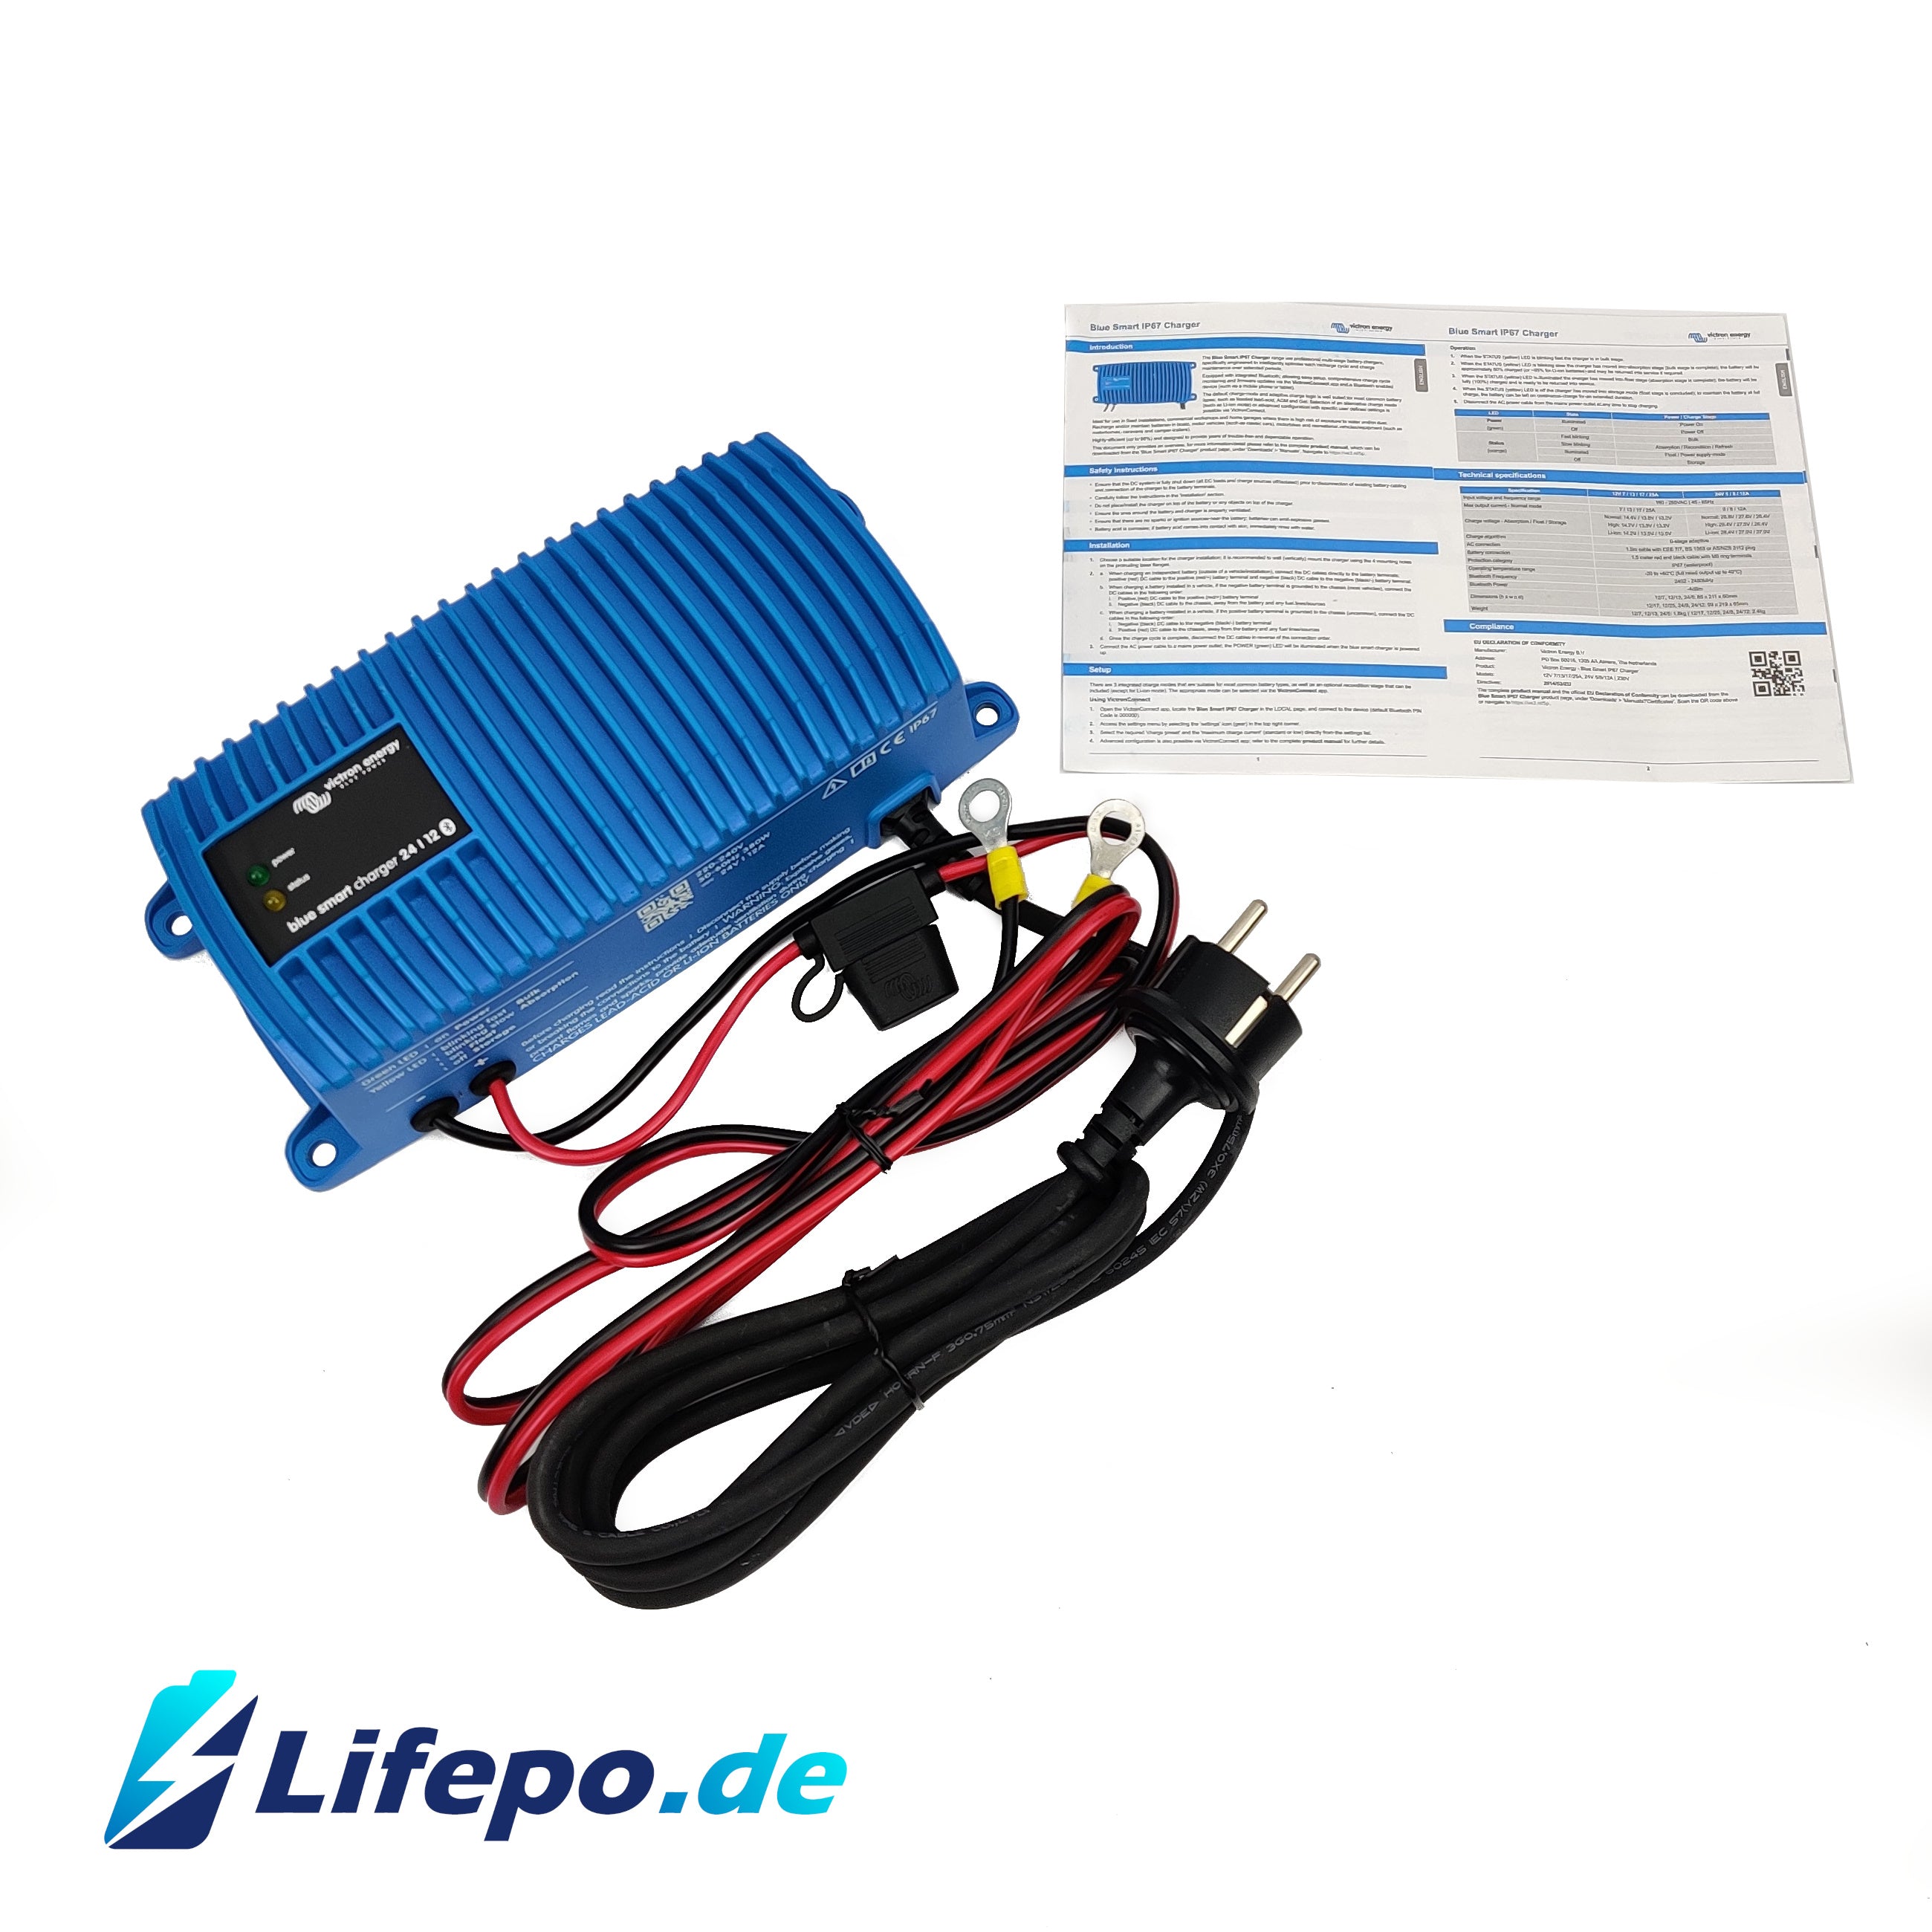 Victron Energy Blue Smart IP67 Ladegerät 24/12 230V